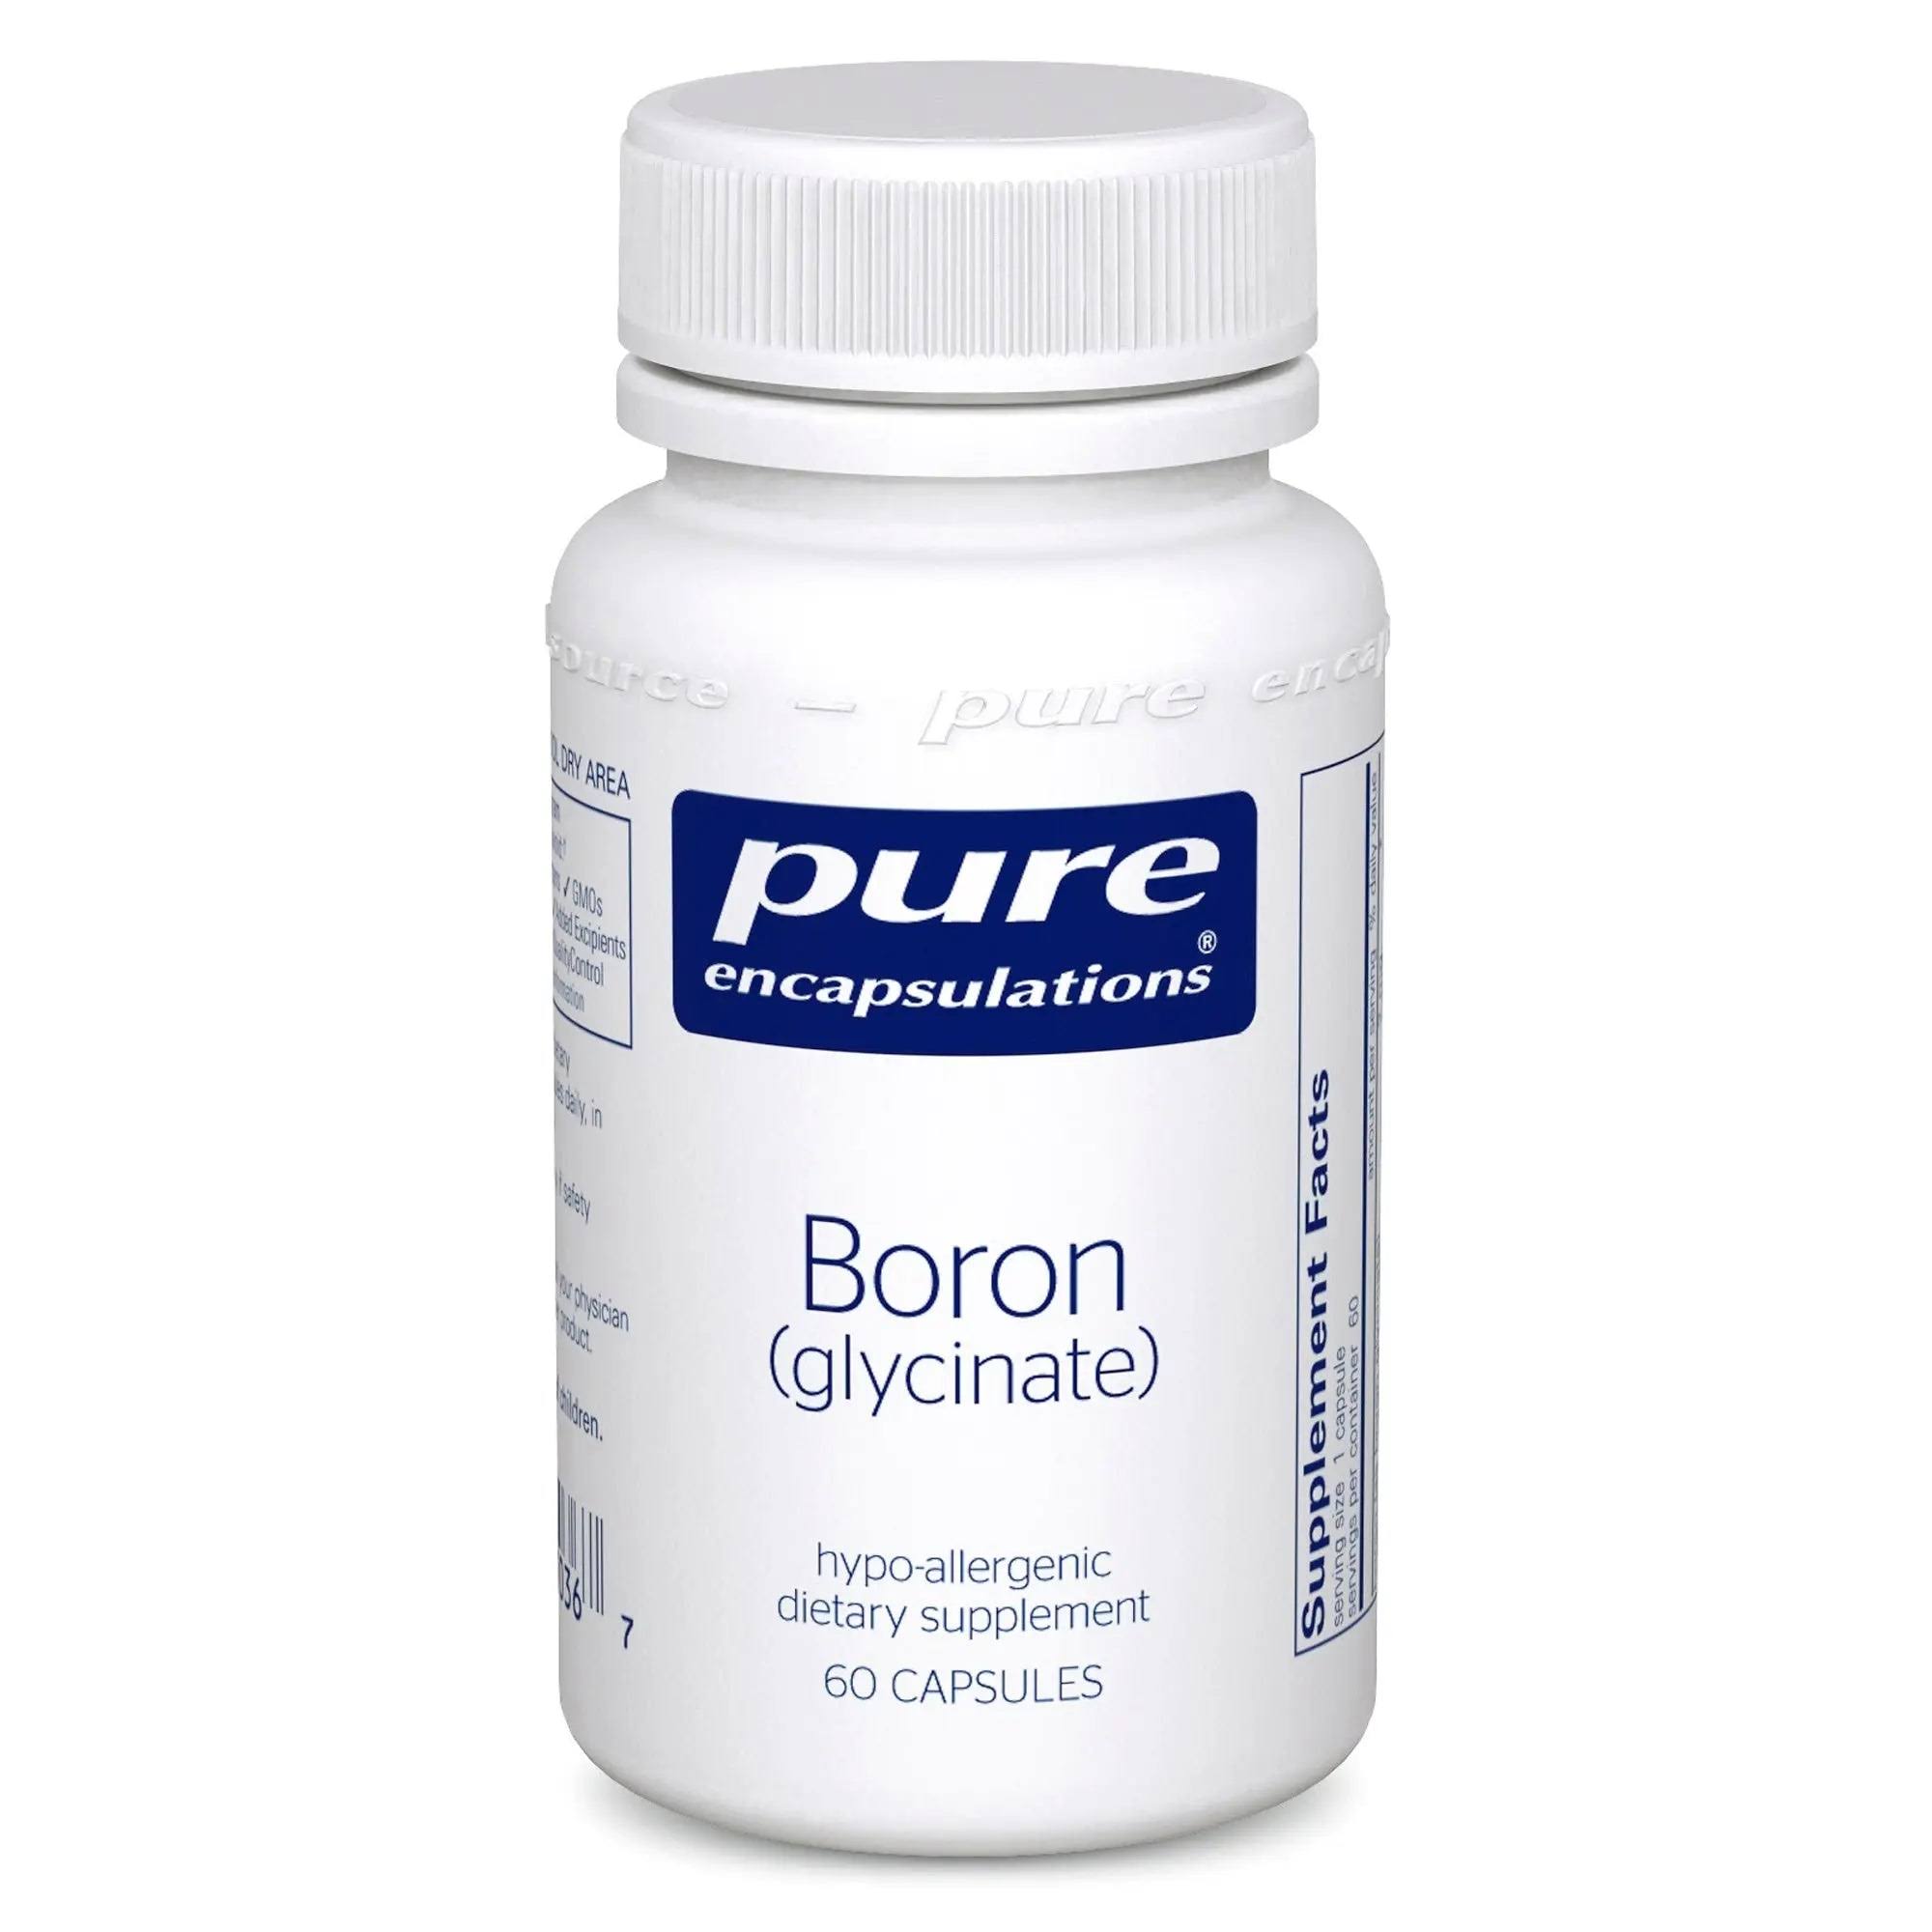 Pure Encapsulations Boron Glycinate Hypoallergenic Supplement - 60ct